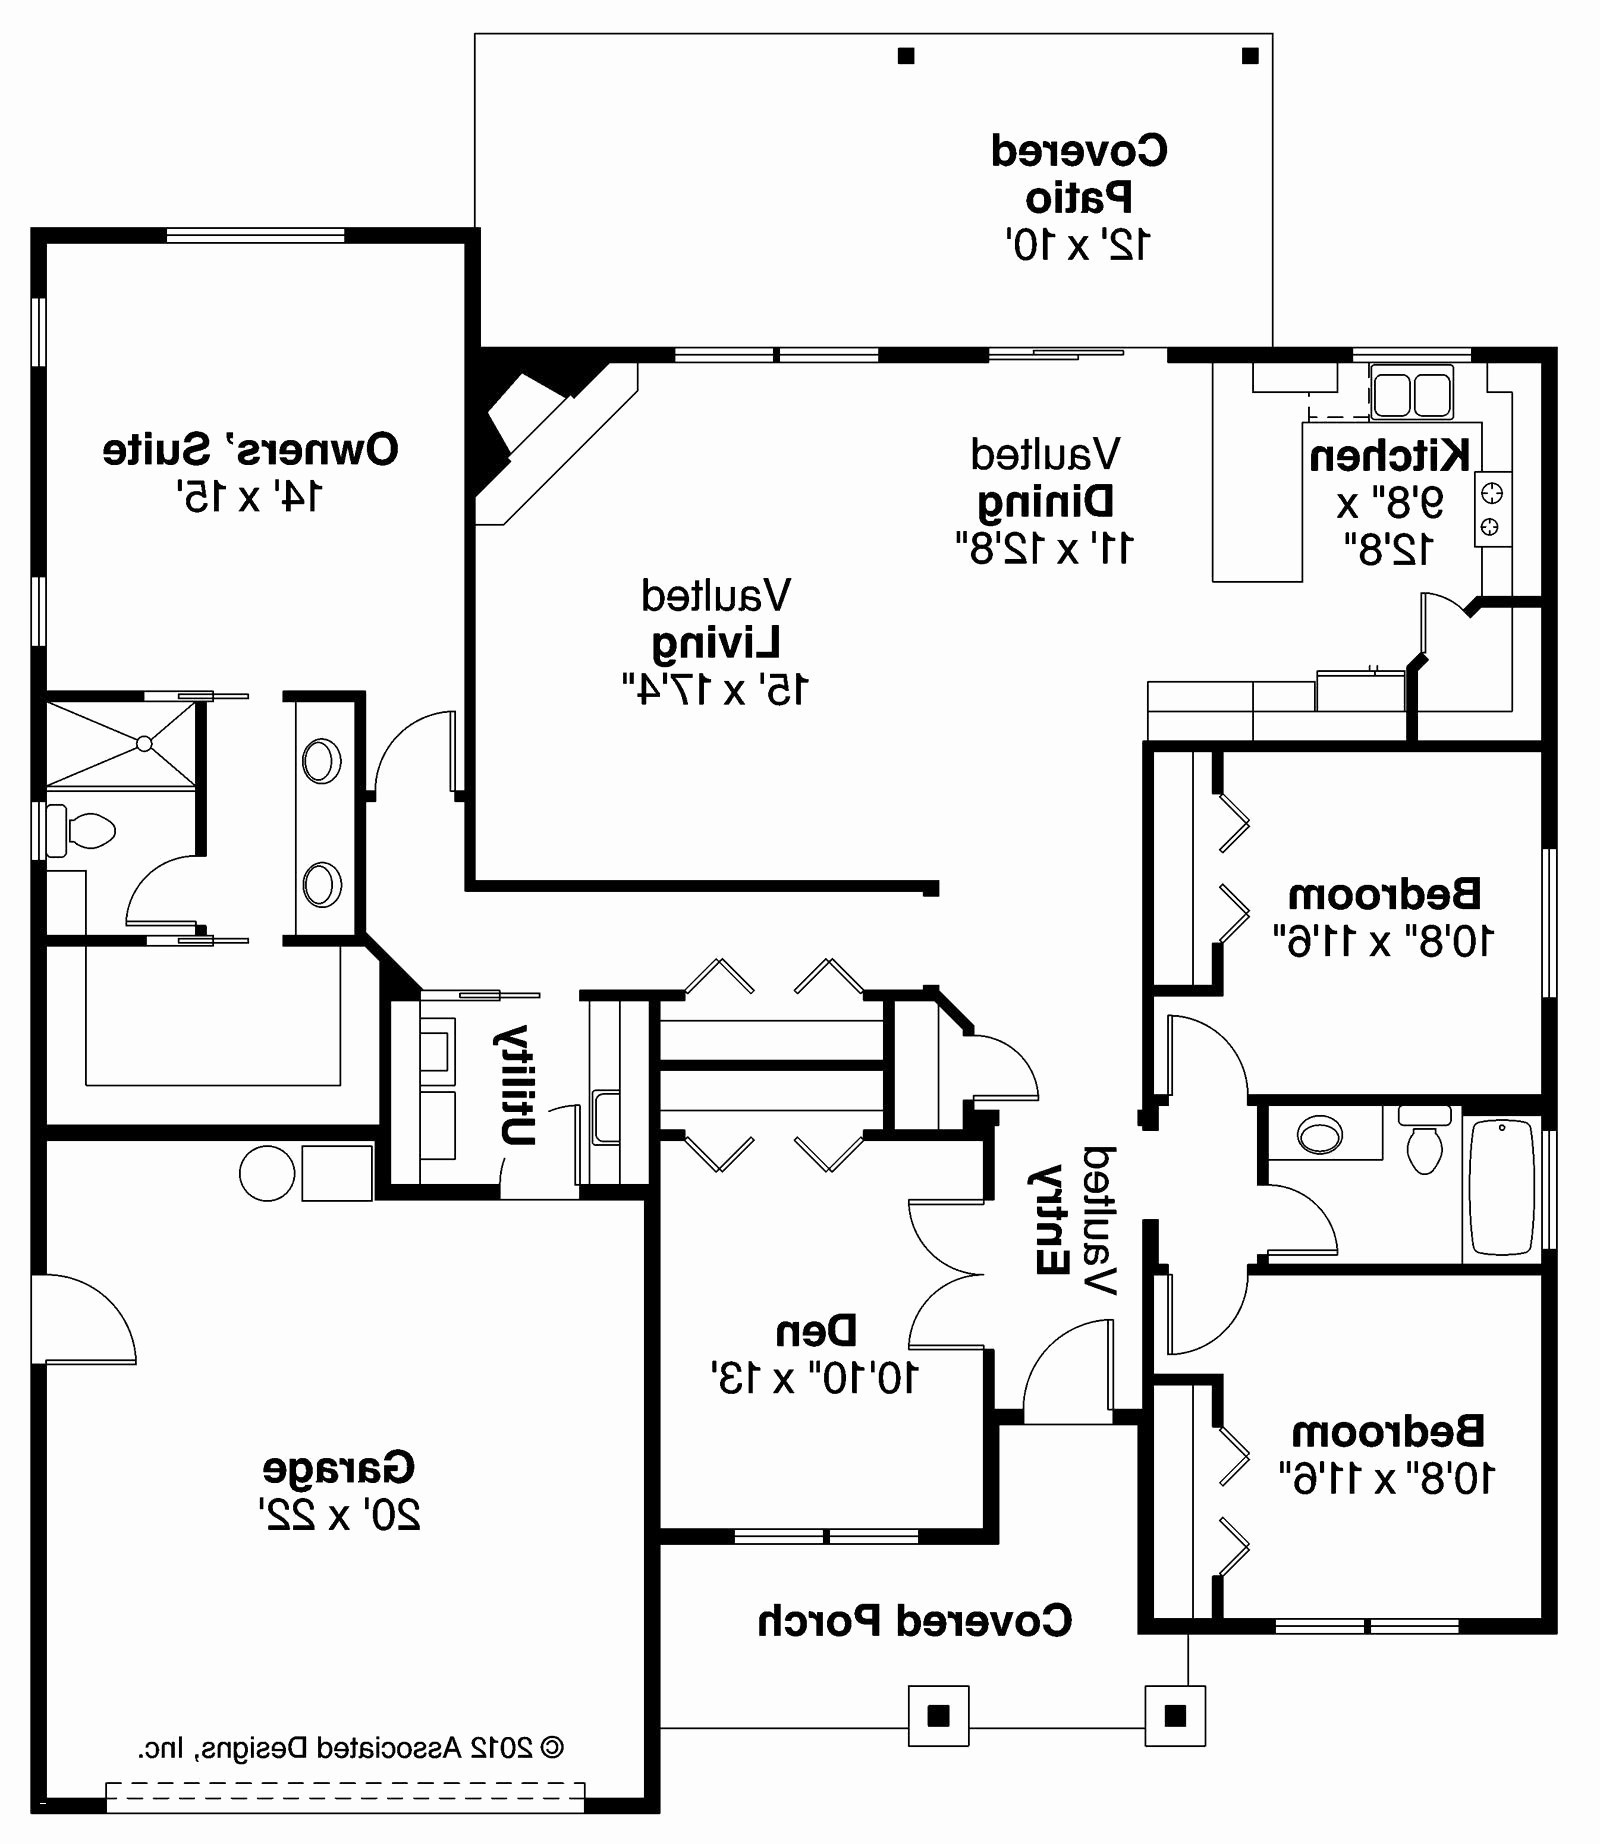 A Wiring Diagram New House Wiring Diagram Electrical Floor Plan 2004 2010 Bmw X3 E83 3